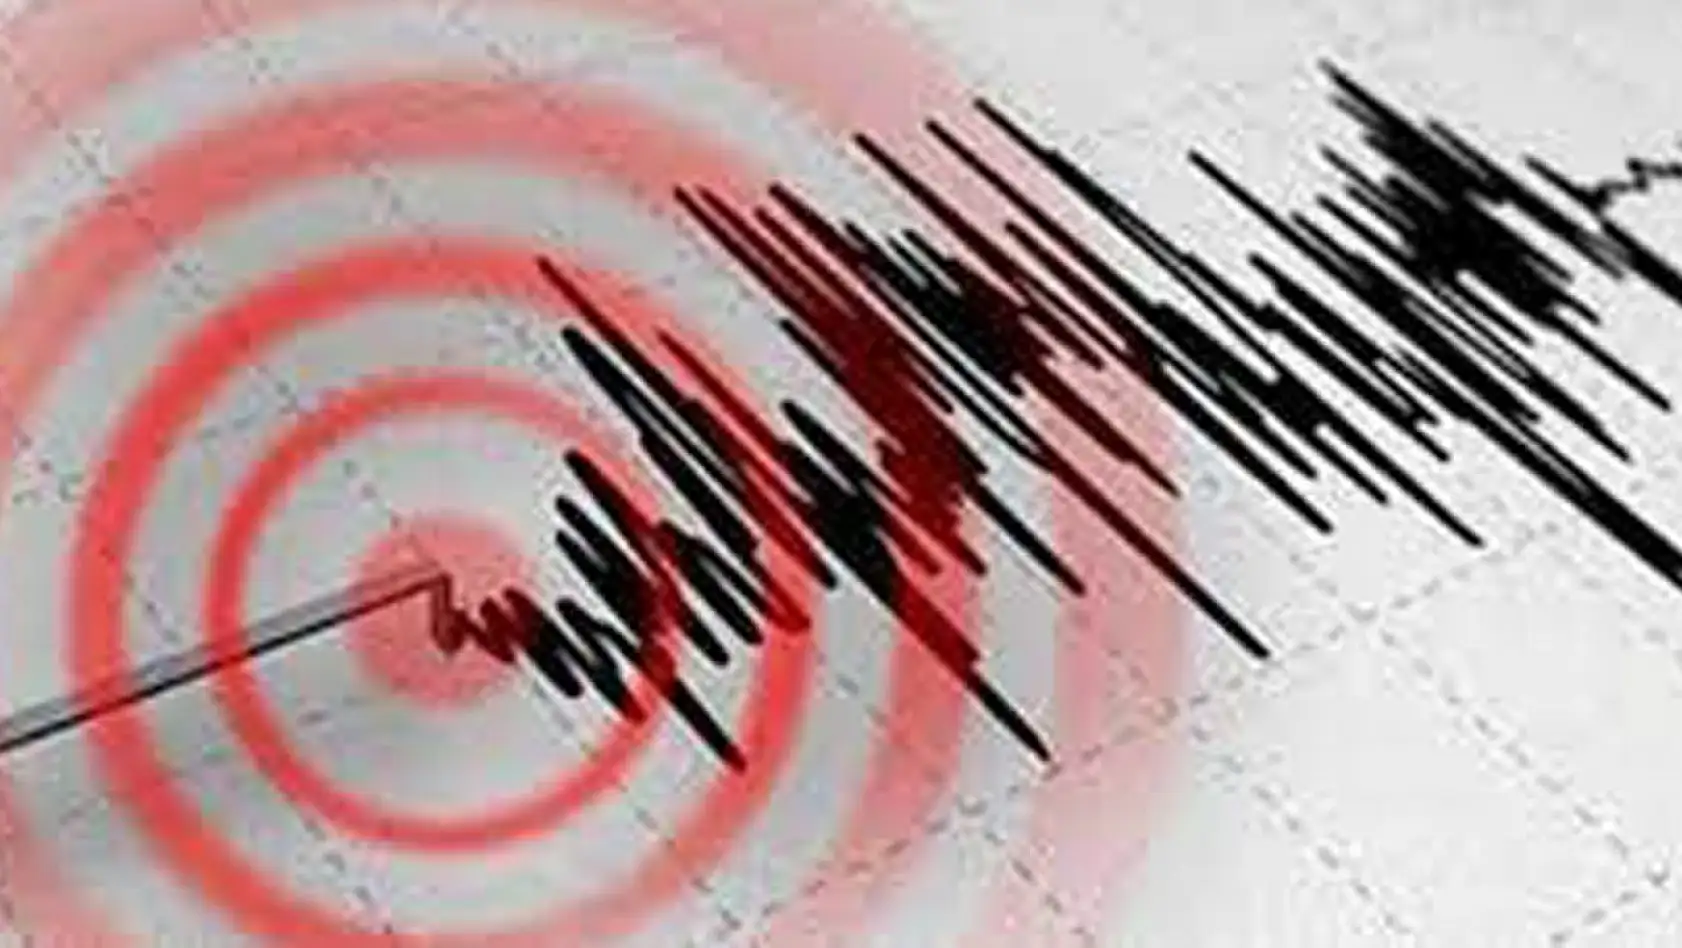 Malatya'da Deprem, Elazığ'da da Hissedildi